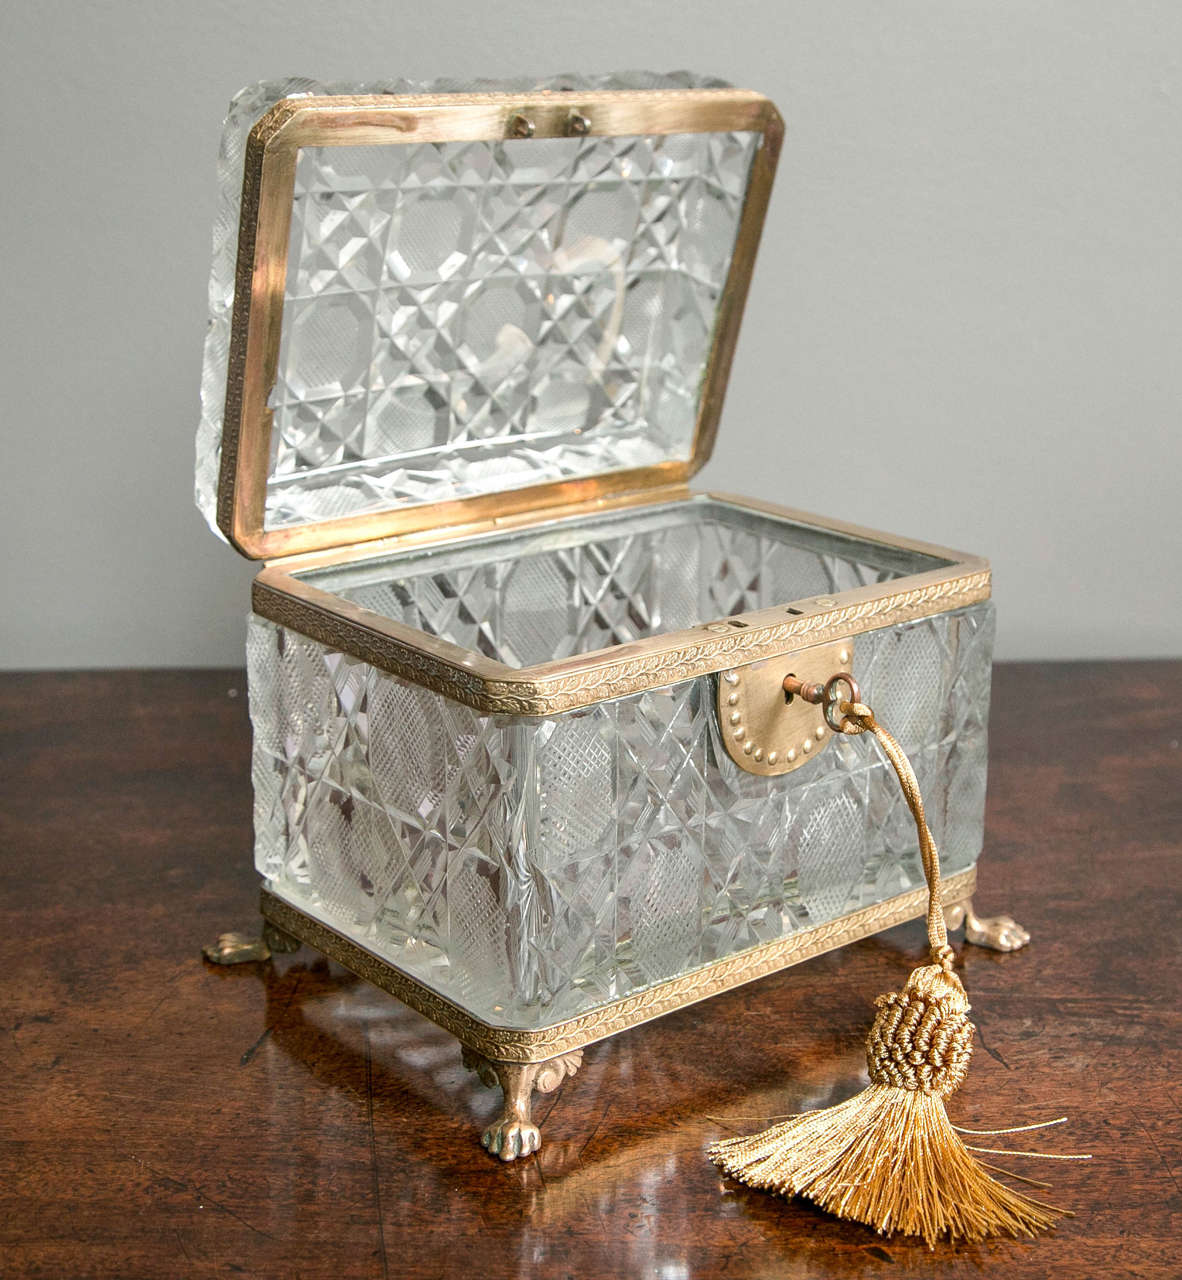 20th Century Large Antique Cut Crystal Box